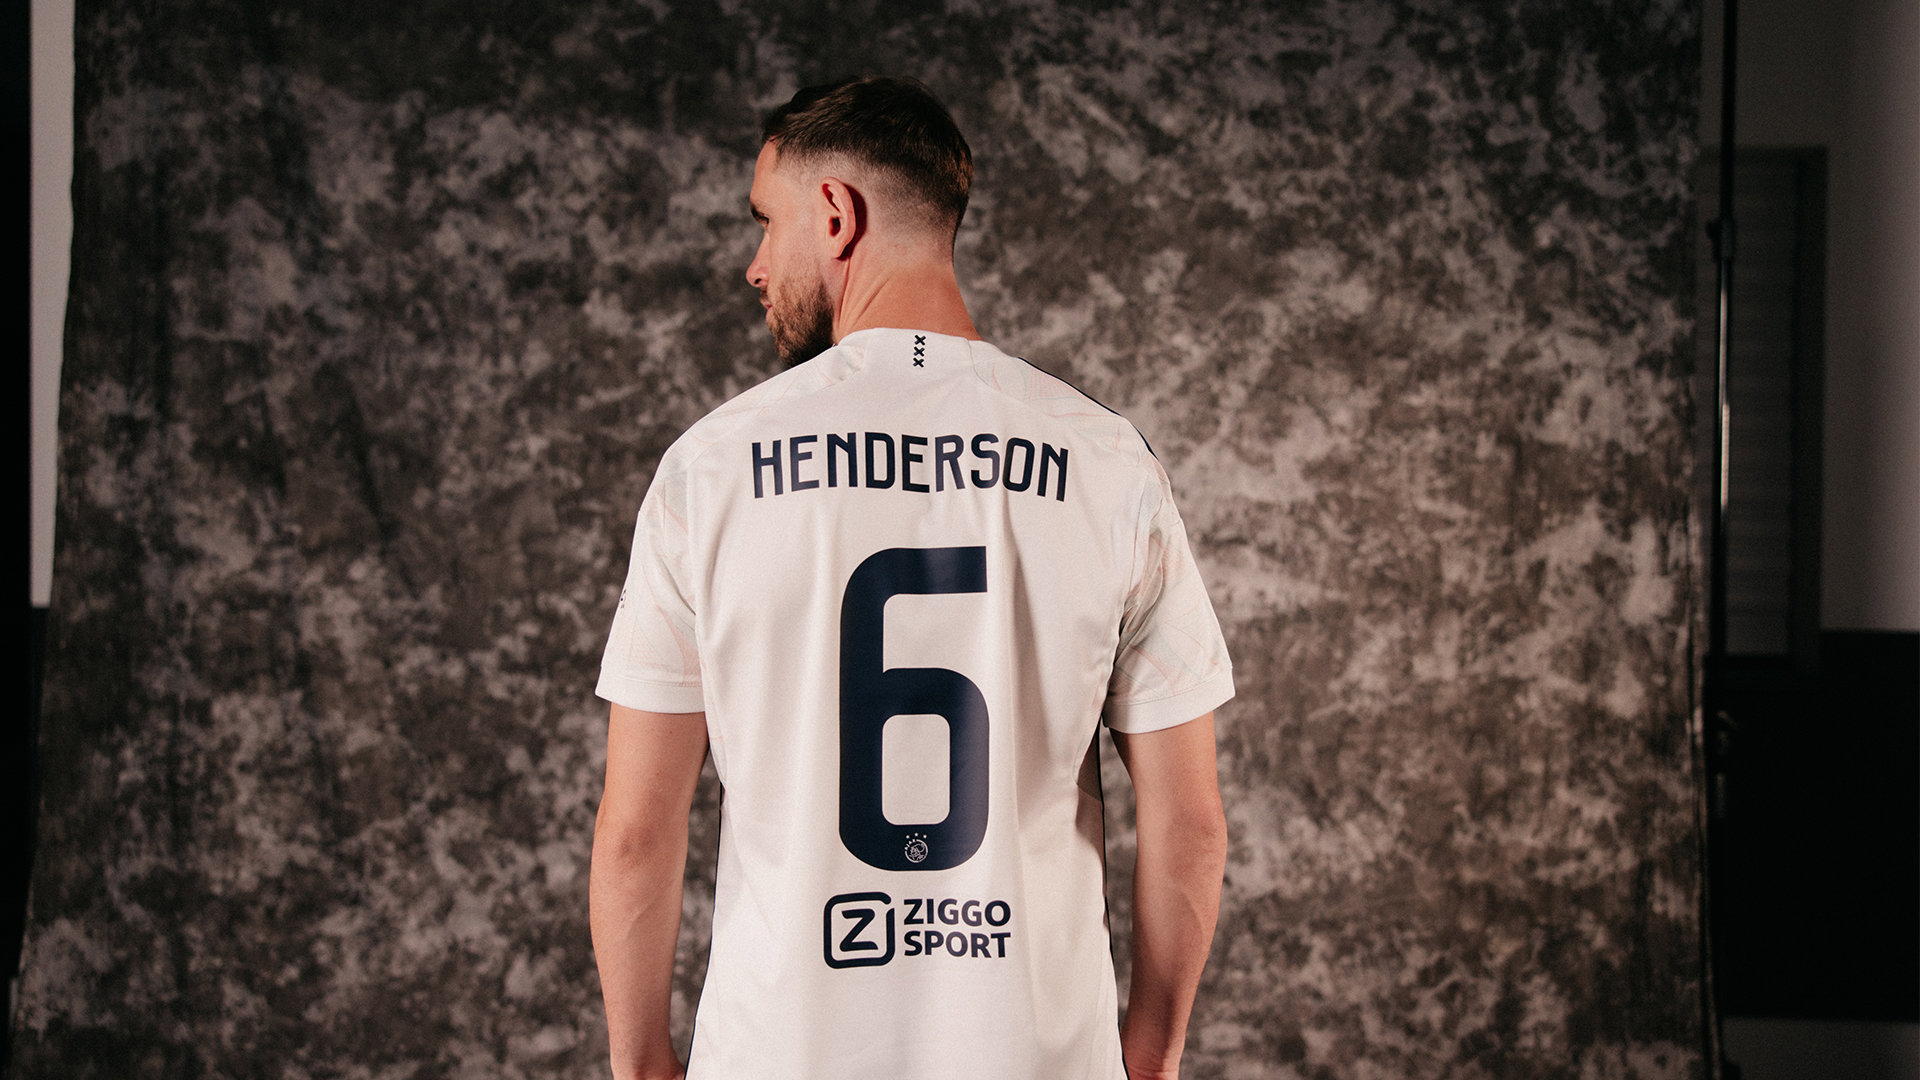 Henderson#6